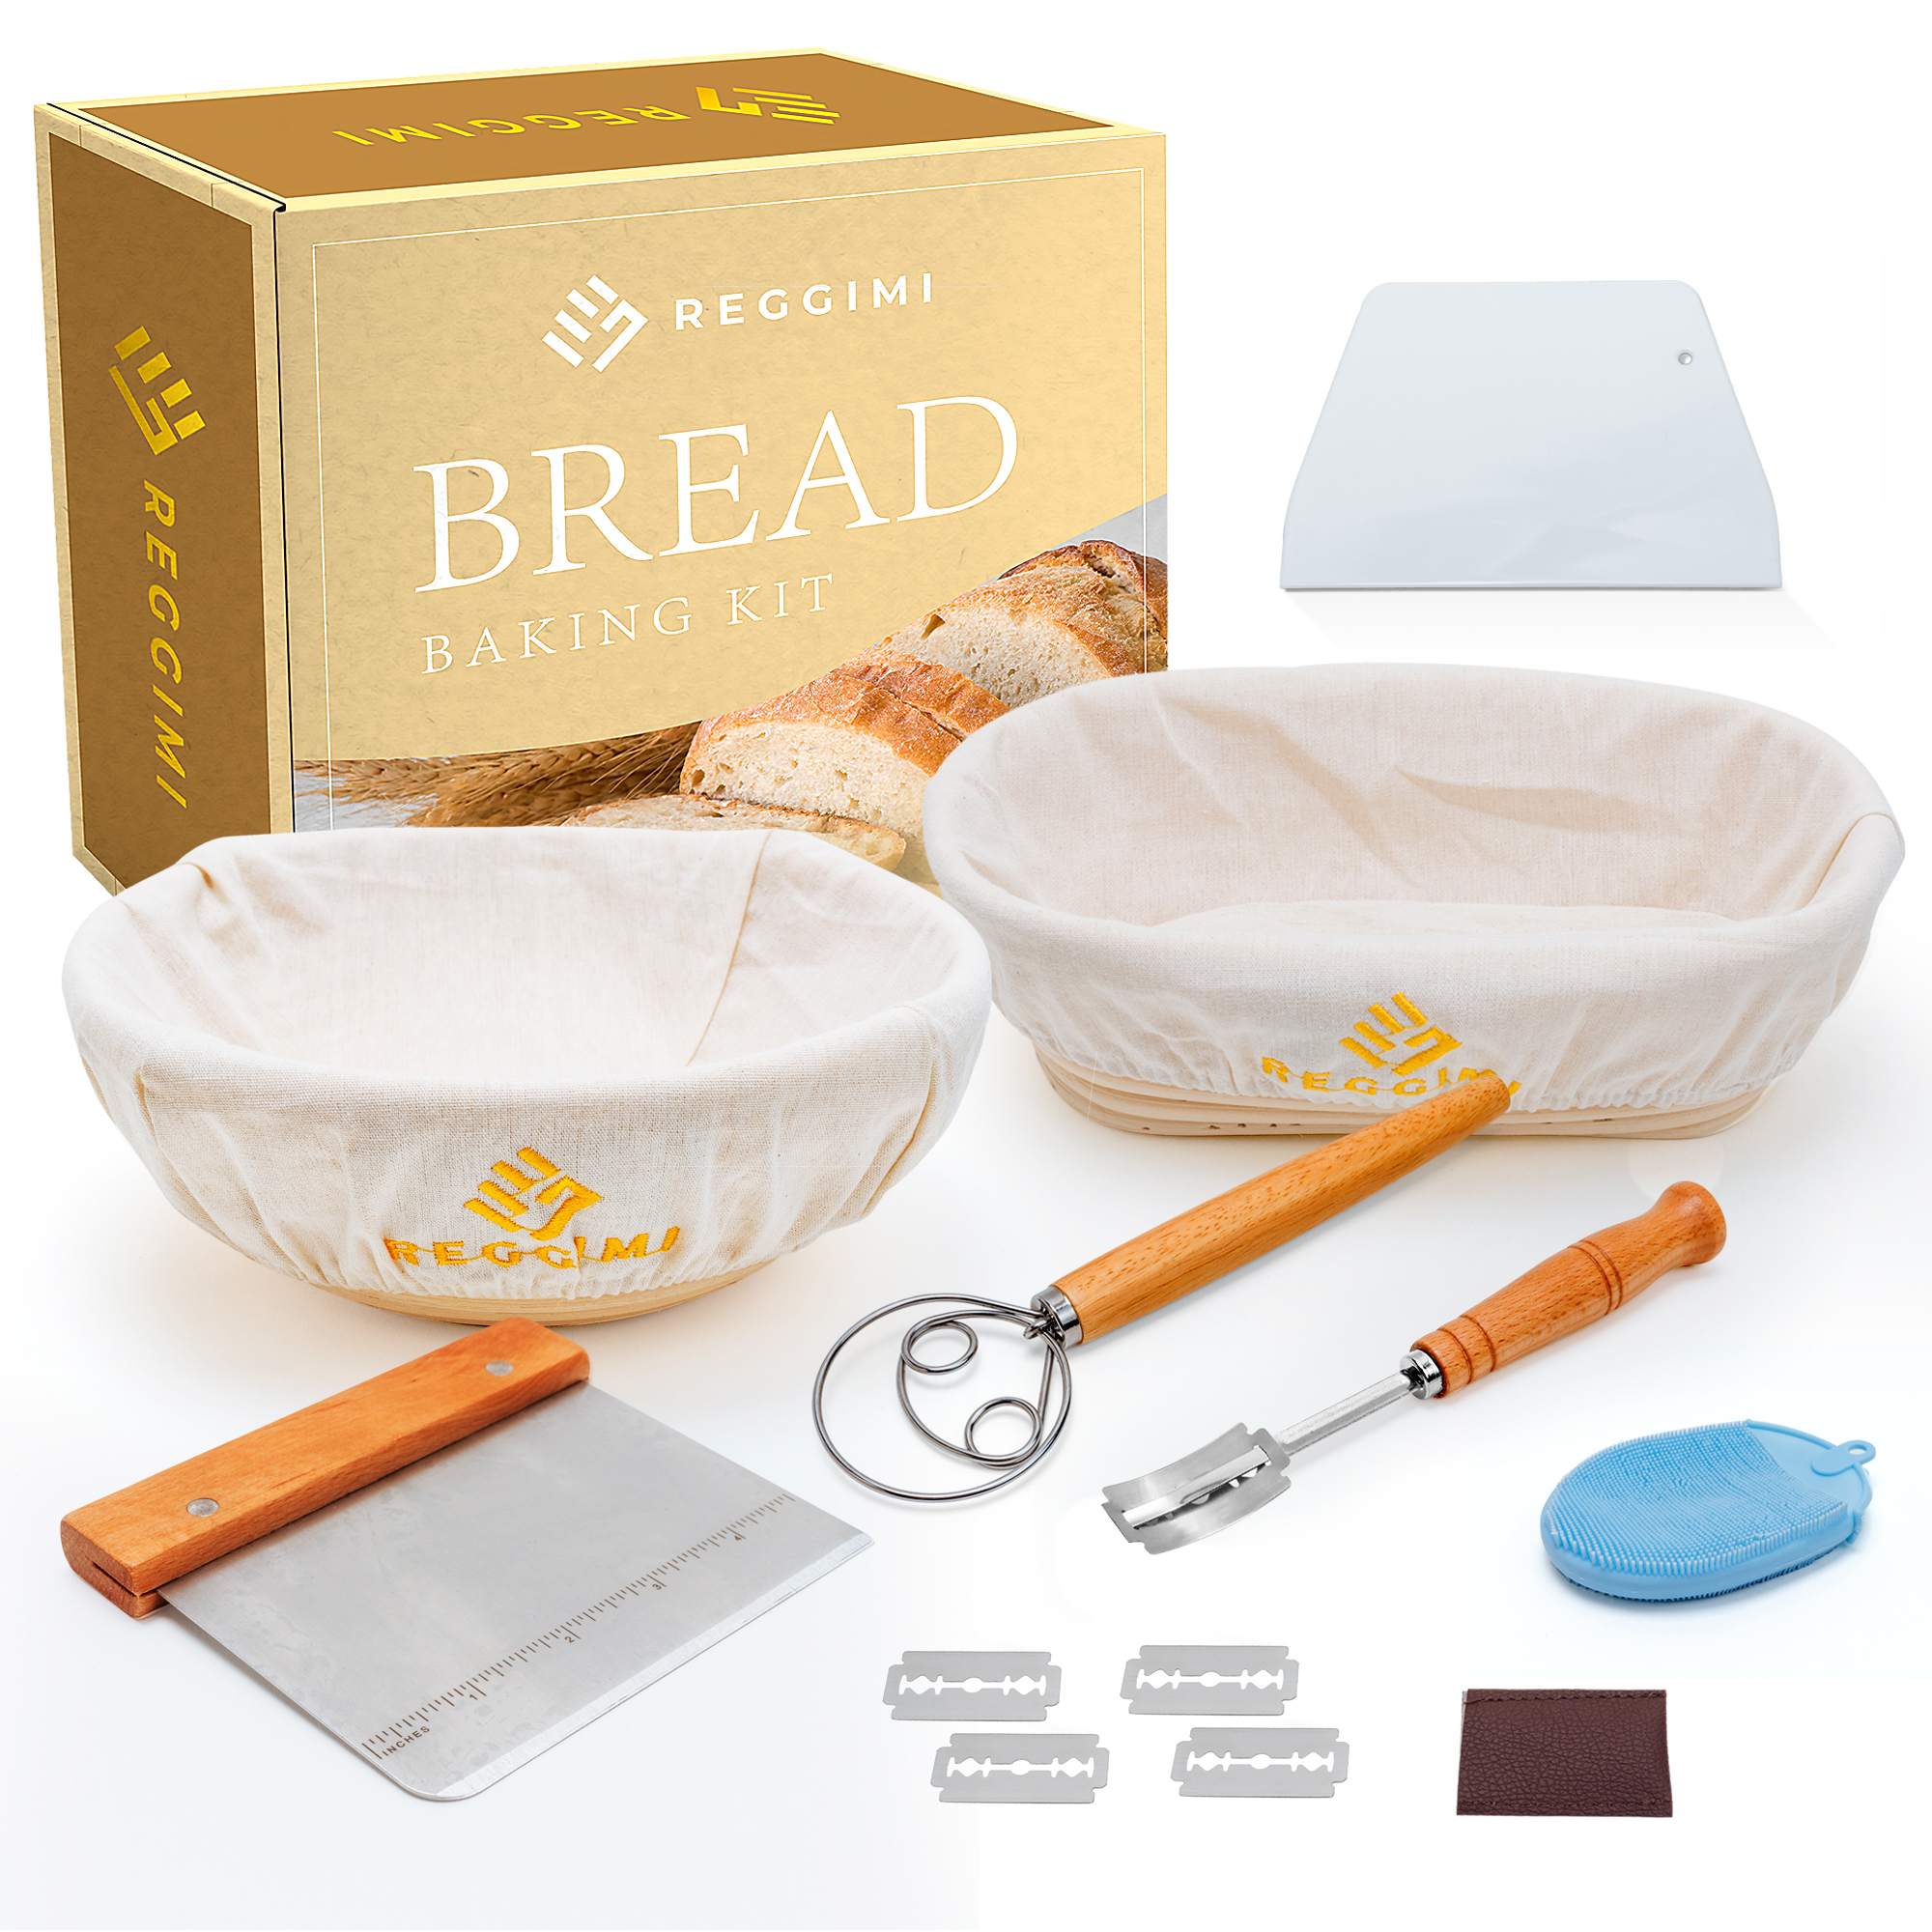  Sourdough Start Kit - Sourdough Bread Baking Supplies 2  Banneton Bread Proofing Basket Bowls, 2 Cloths, Whisk, Bread Lame, Dough  Scraper, 2 Brushes - Sourdough Starter Kit Bread Making & Baking